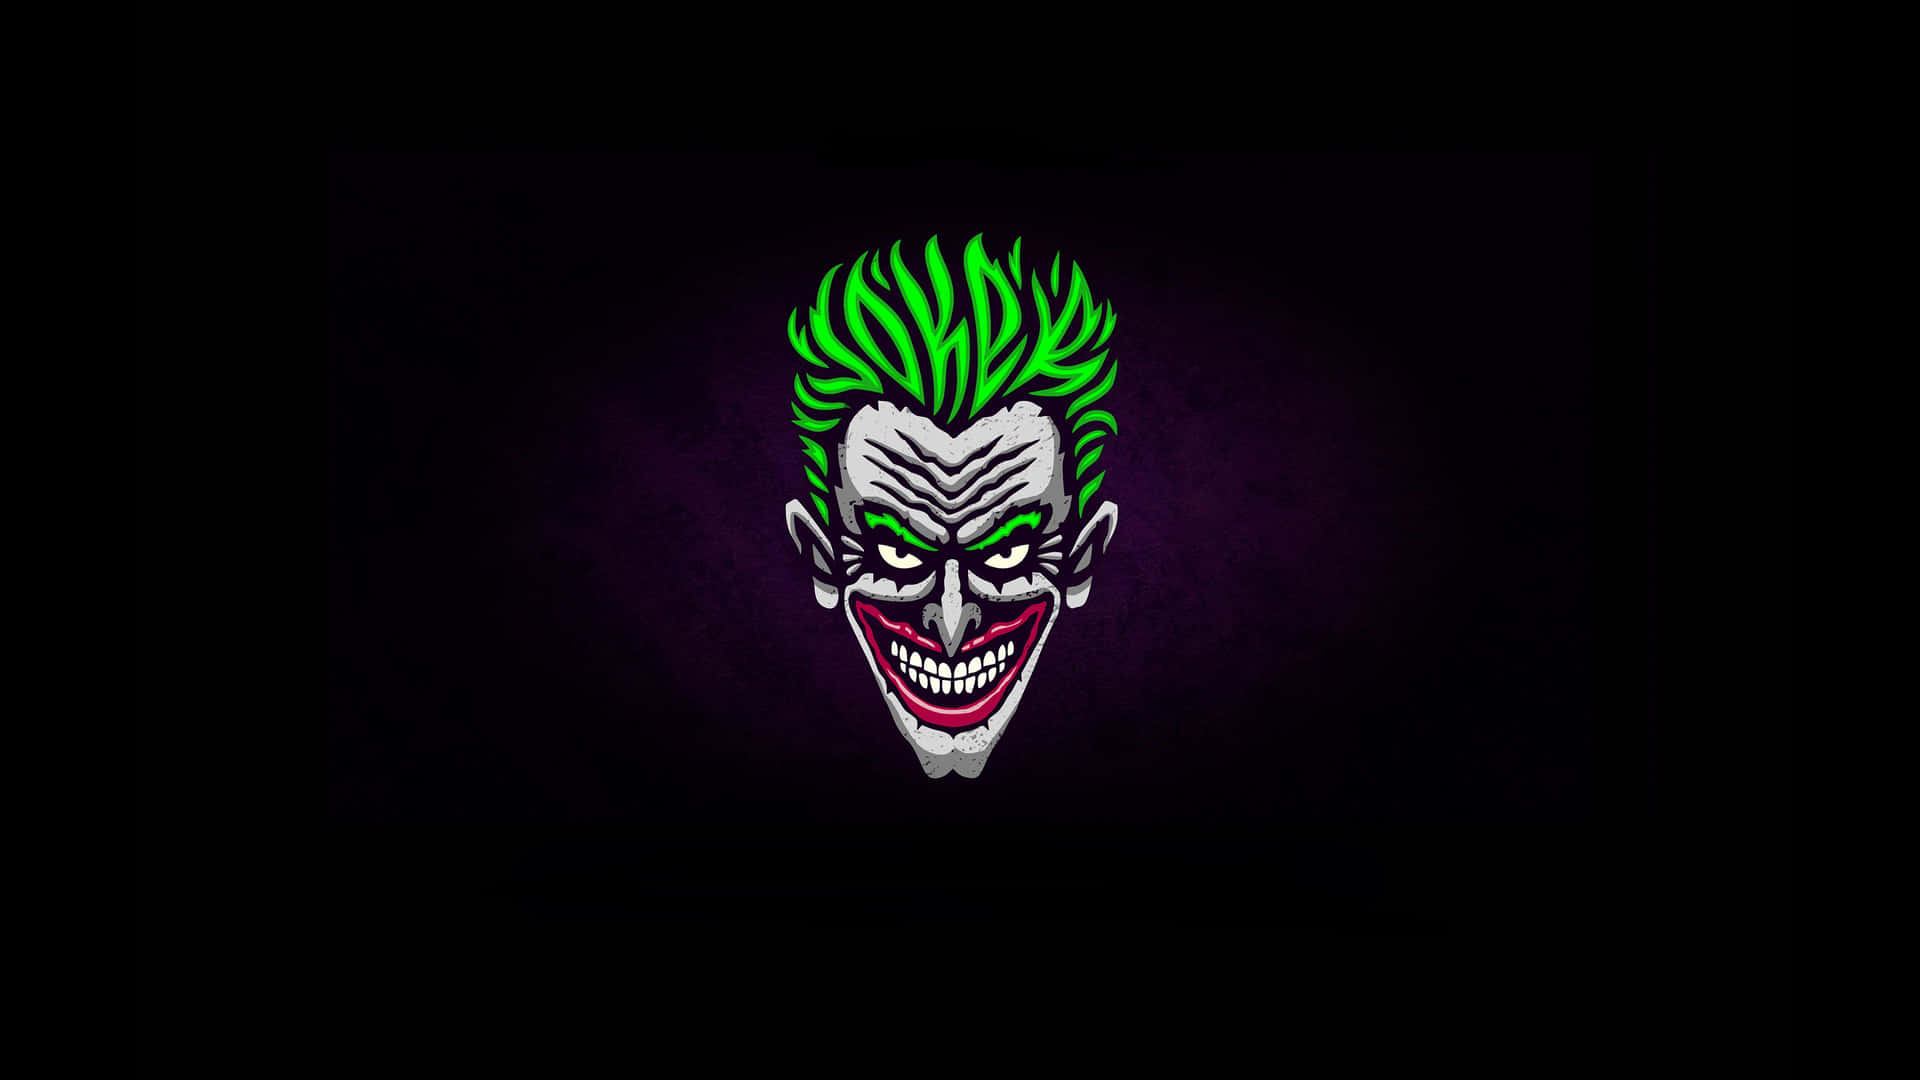 Free Joker HD Wallpaper APK Download For Android | GetJar